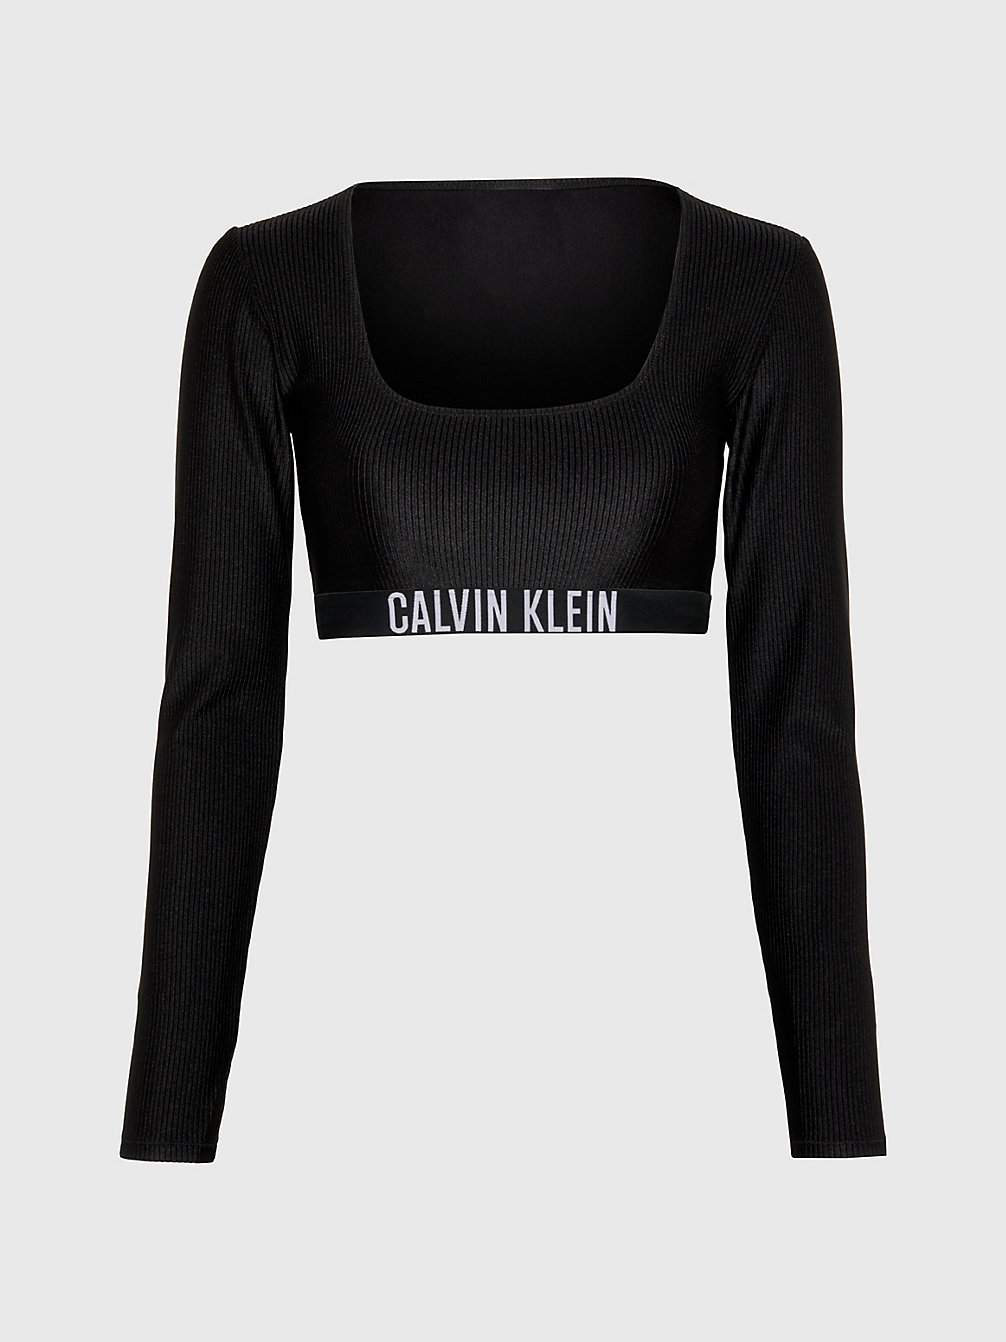 PVH BLACK Rash Guard Bikini Top undefined women Calvin Klein